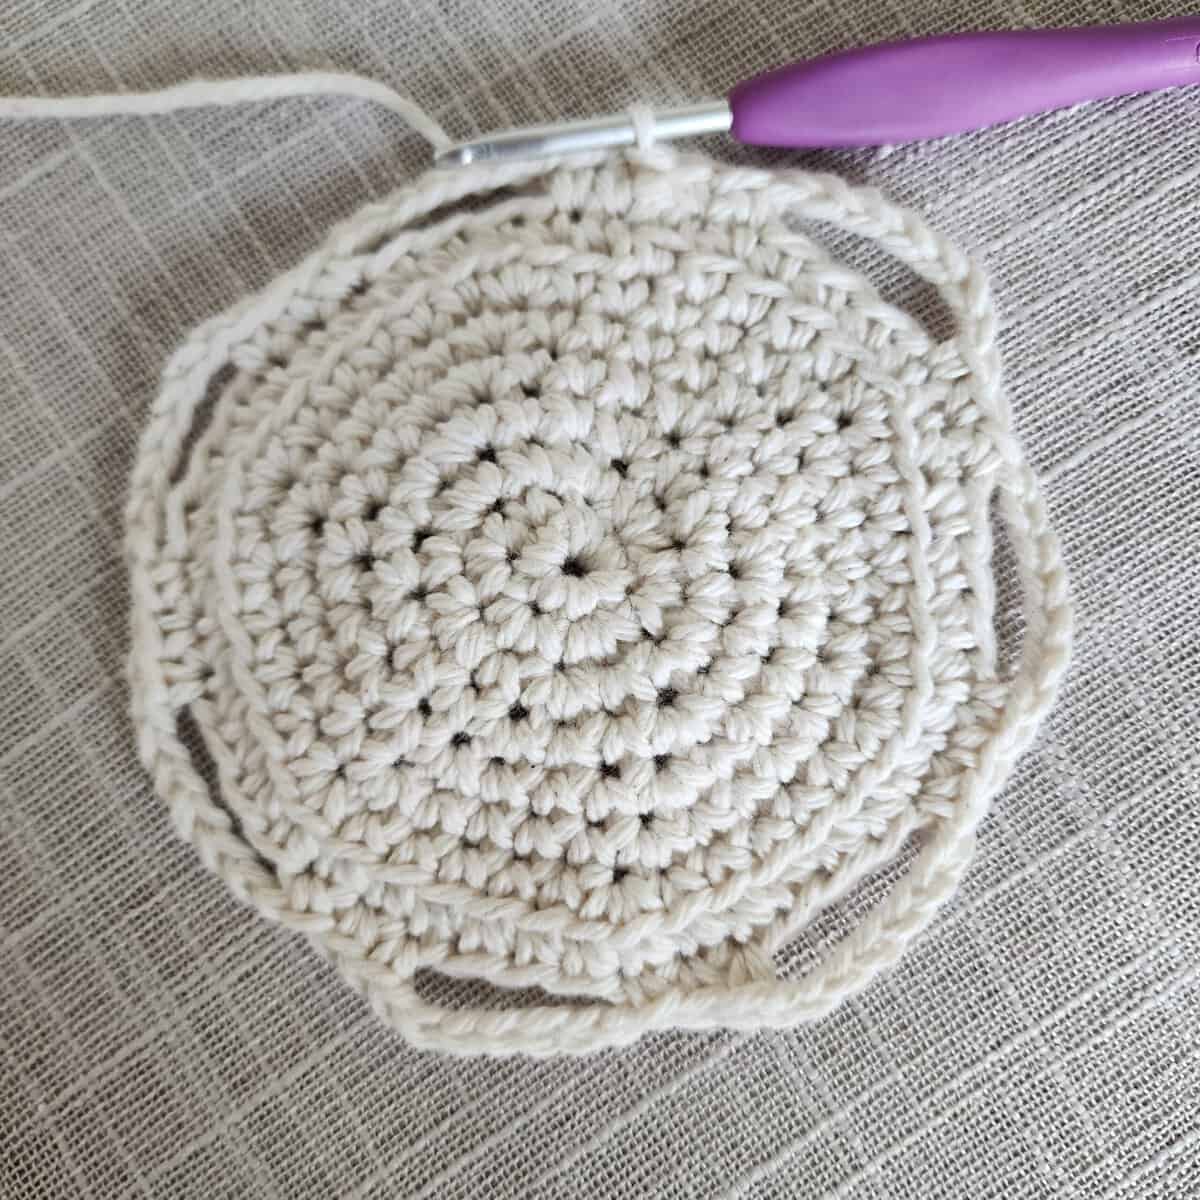 Small crochet circle for base of plant hanger basket.